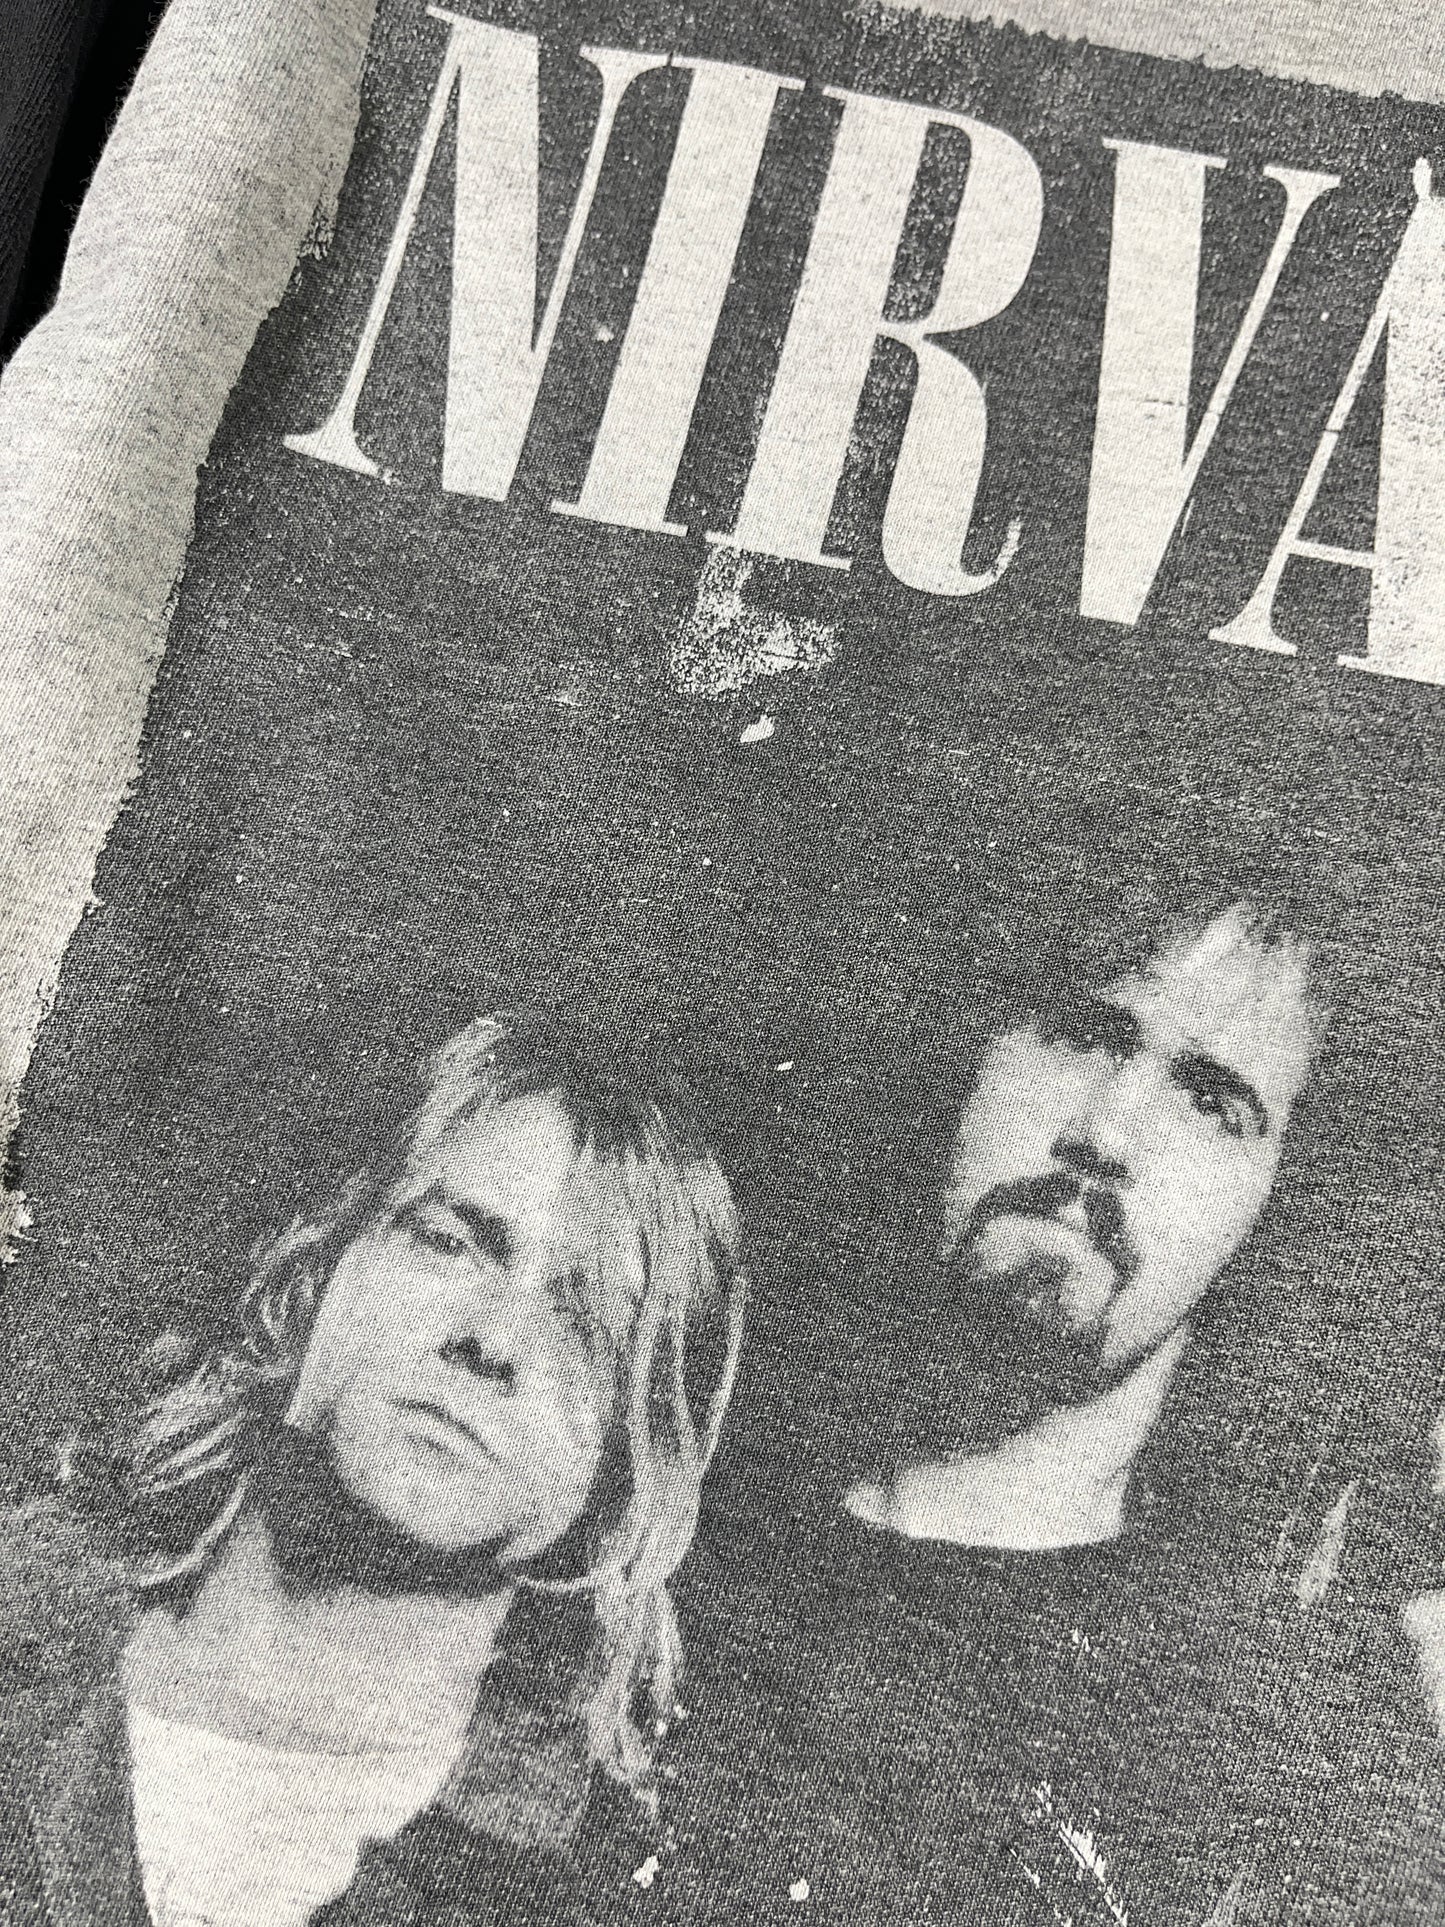 Vintage Nirvana T-Shirt Top Baseball Cut Band Tee